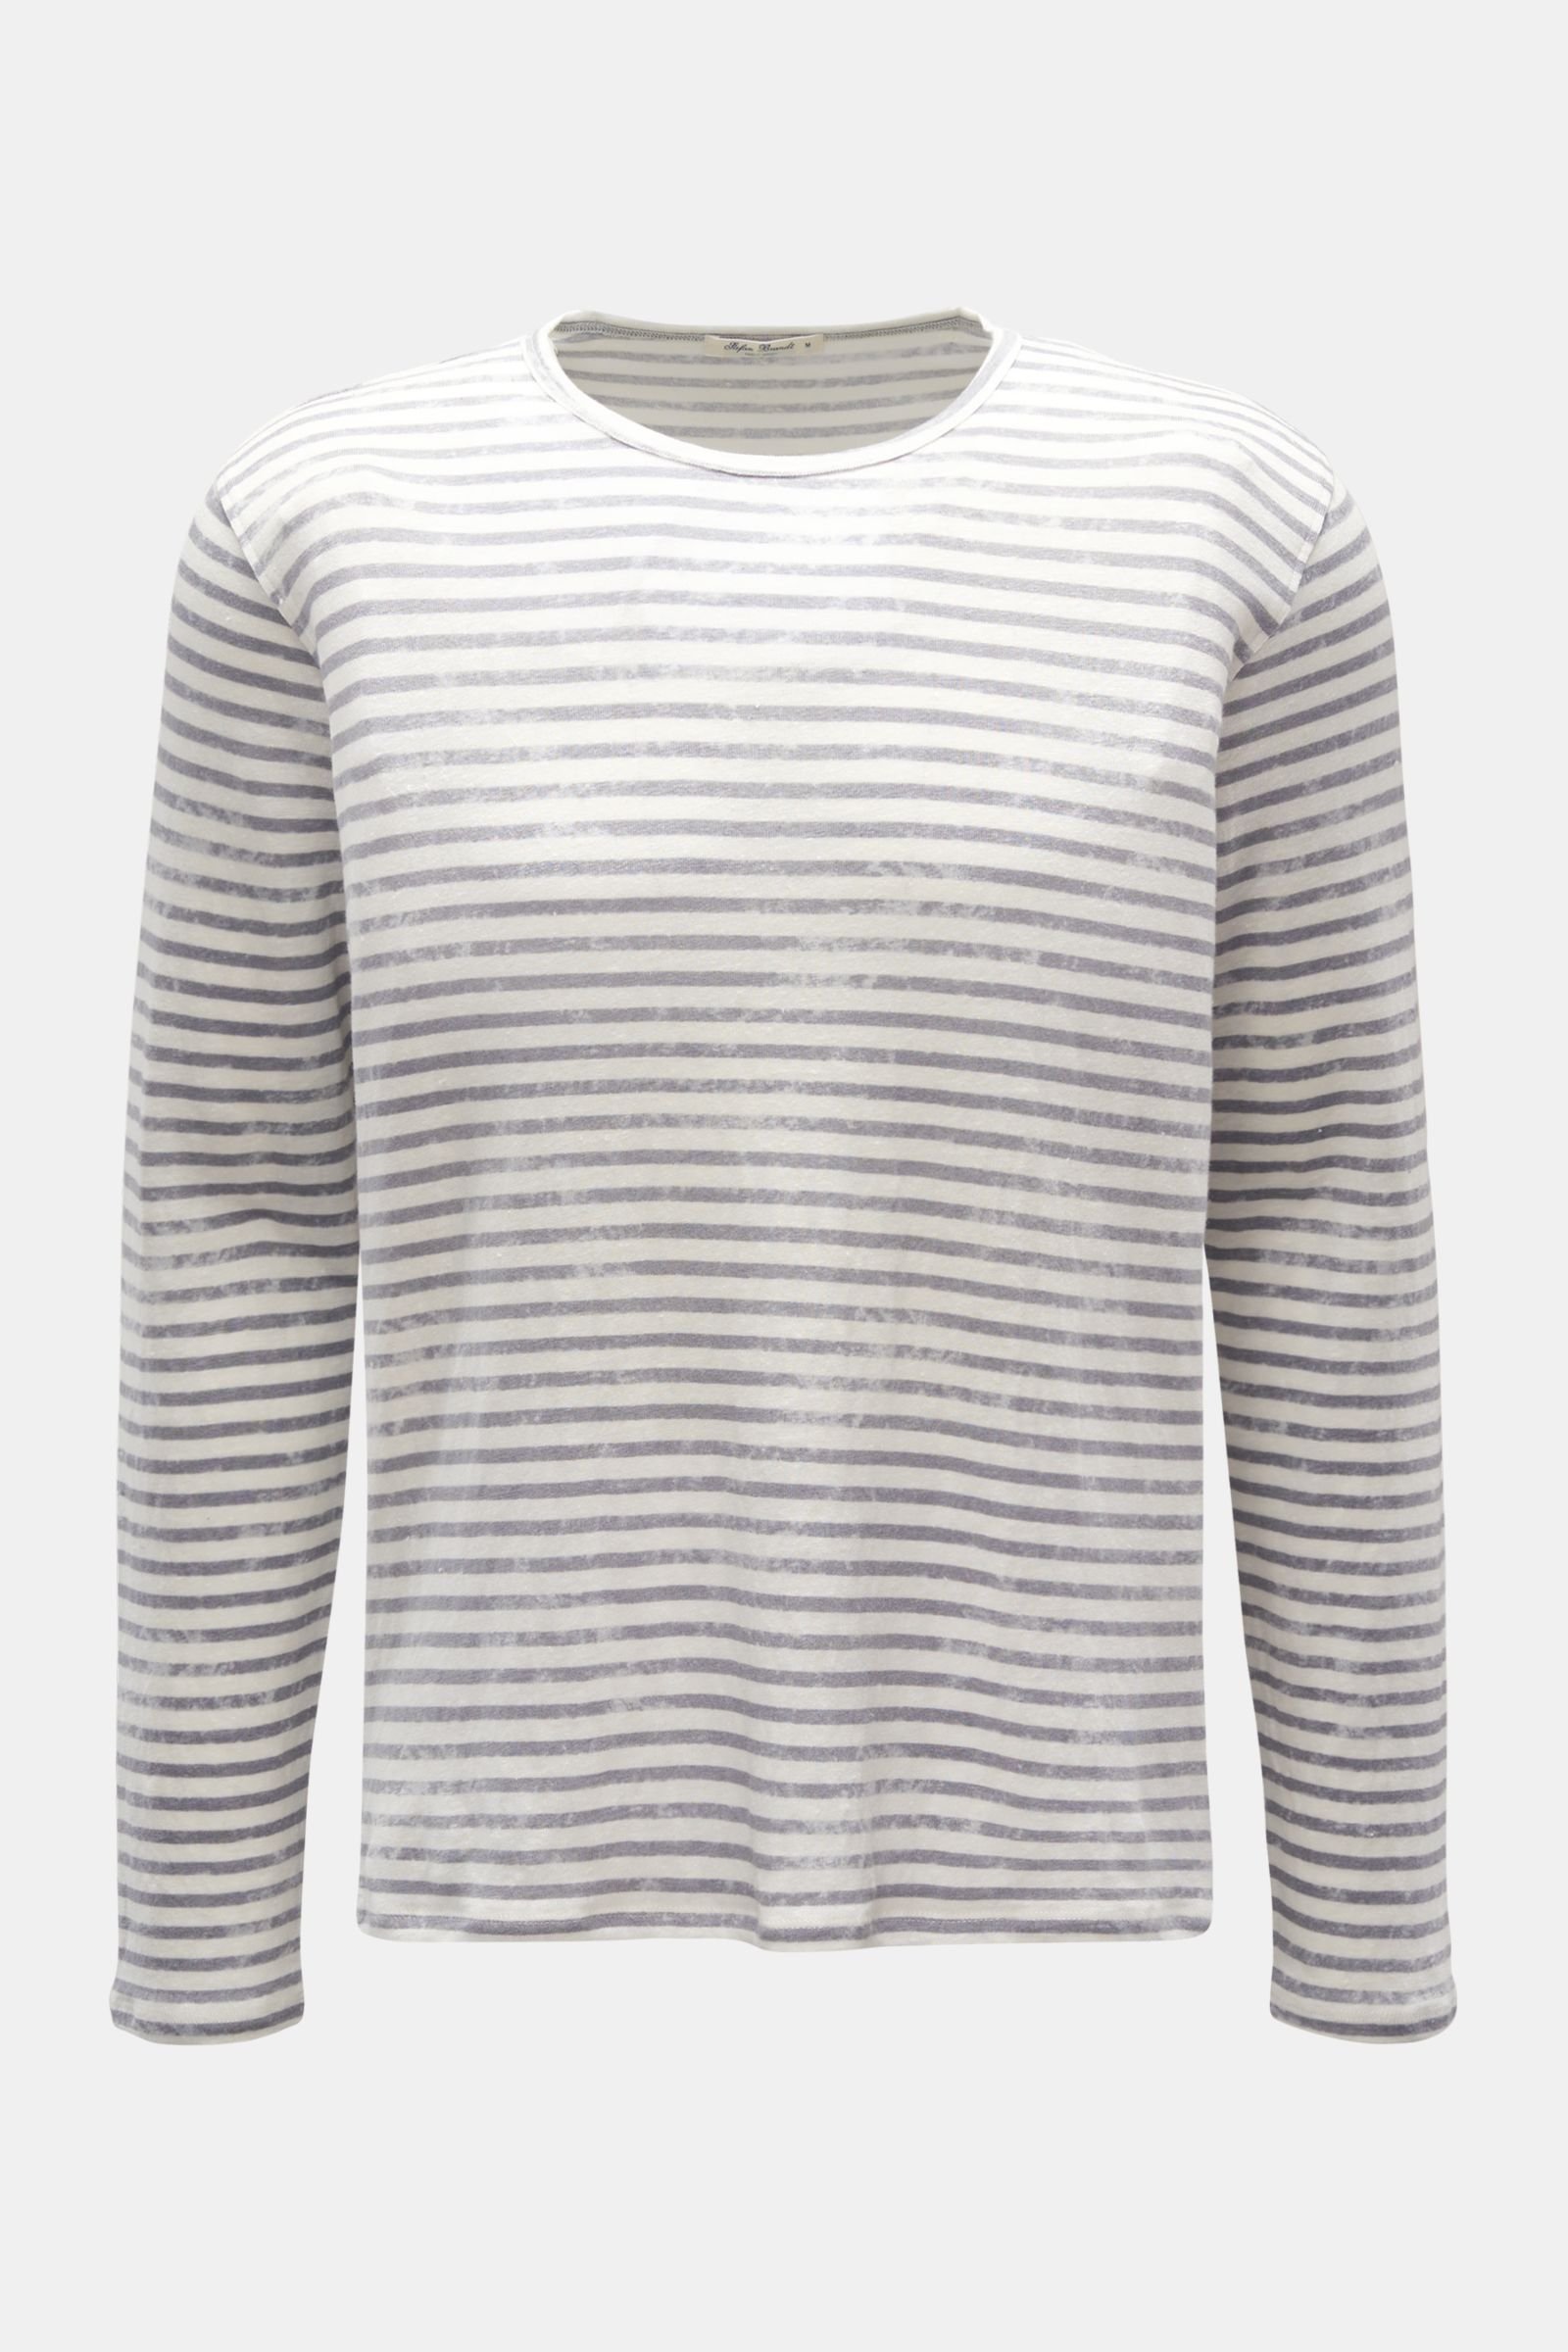 Linen long sleeve grey/white striped